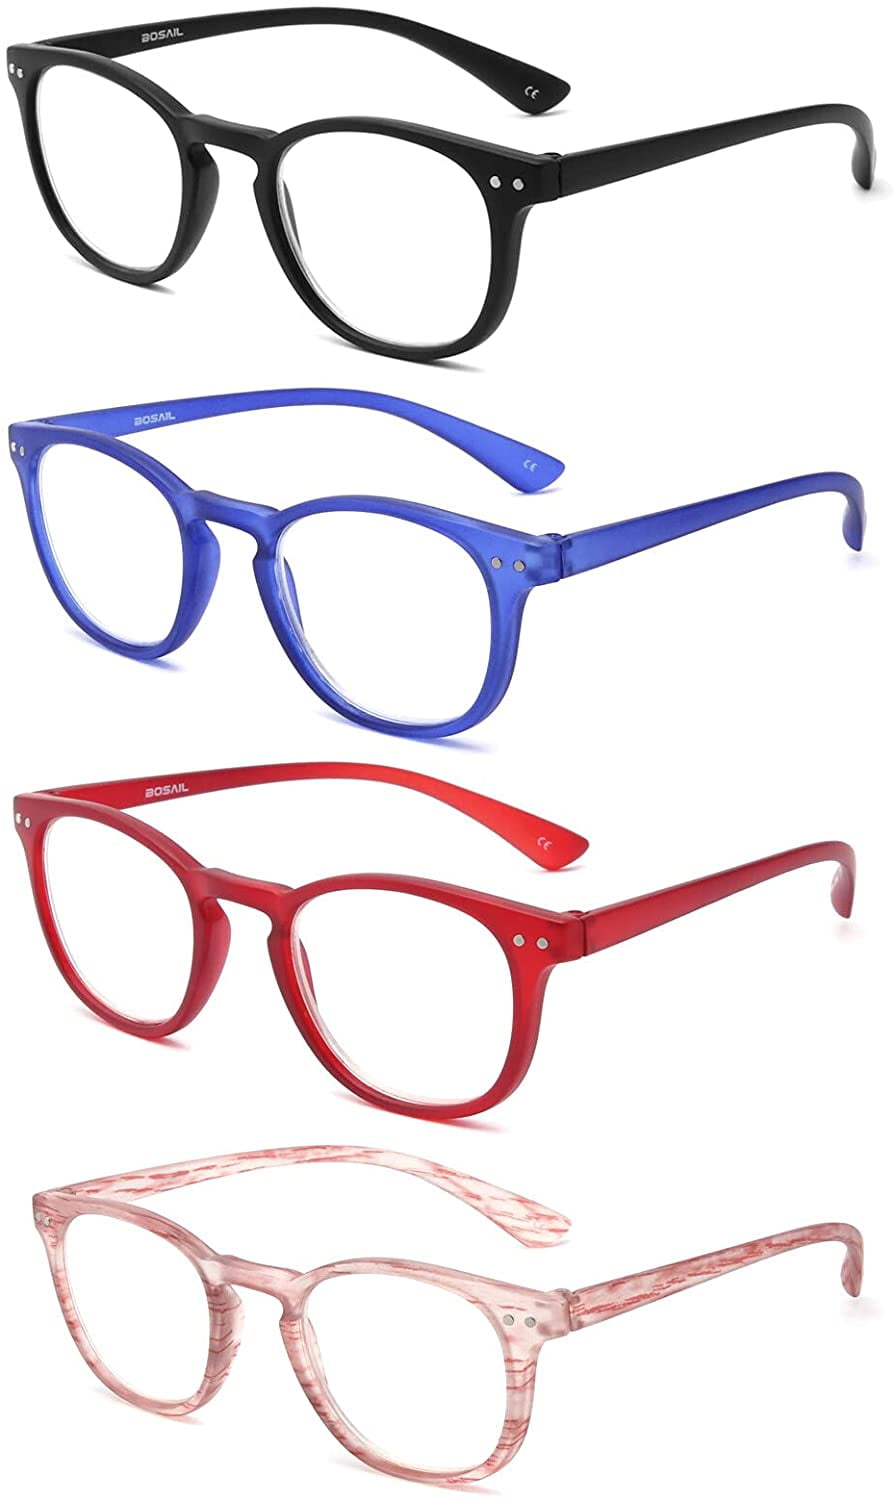 IVNUOYI 6 Pack Reading Glasses Blue Light Blocking with Comfort Spring Hinge,Computer Readers for Men Women,Anti Glare/UV Ray Eyeglasses 2.5 